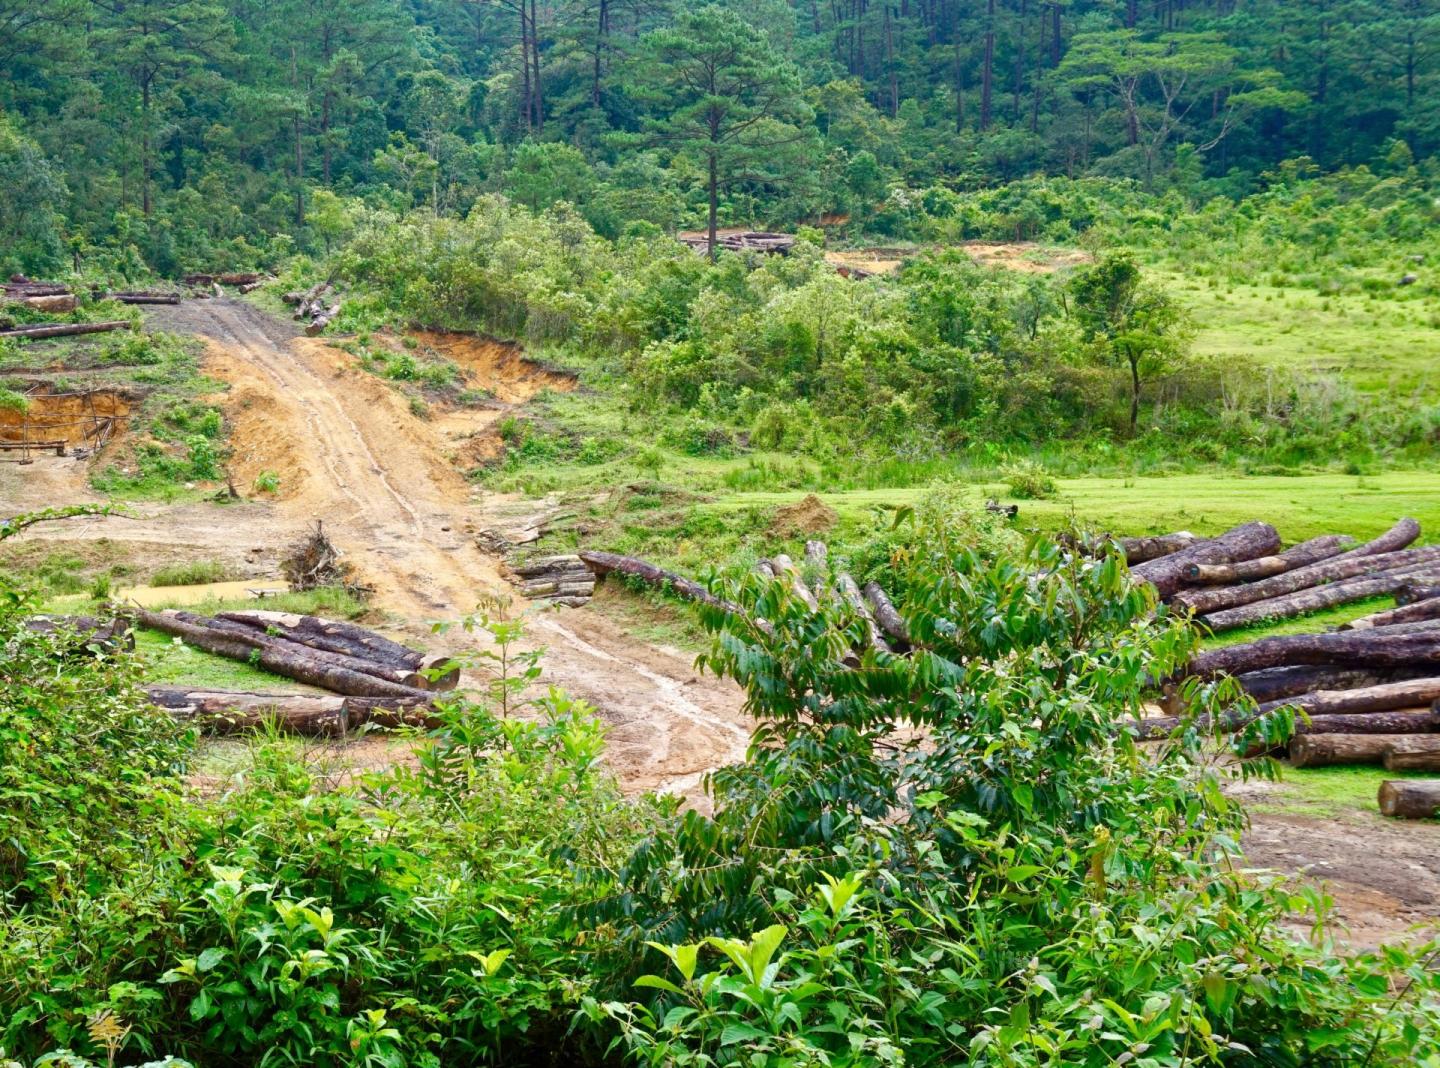 Forest Degradation through Selective Logging